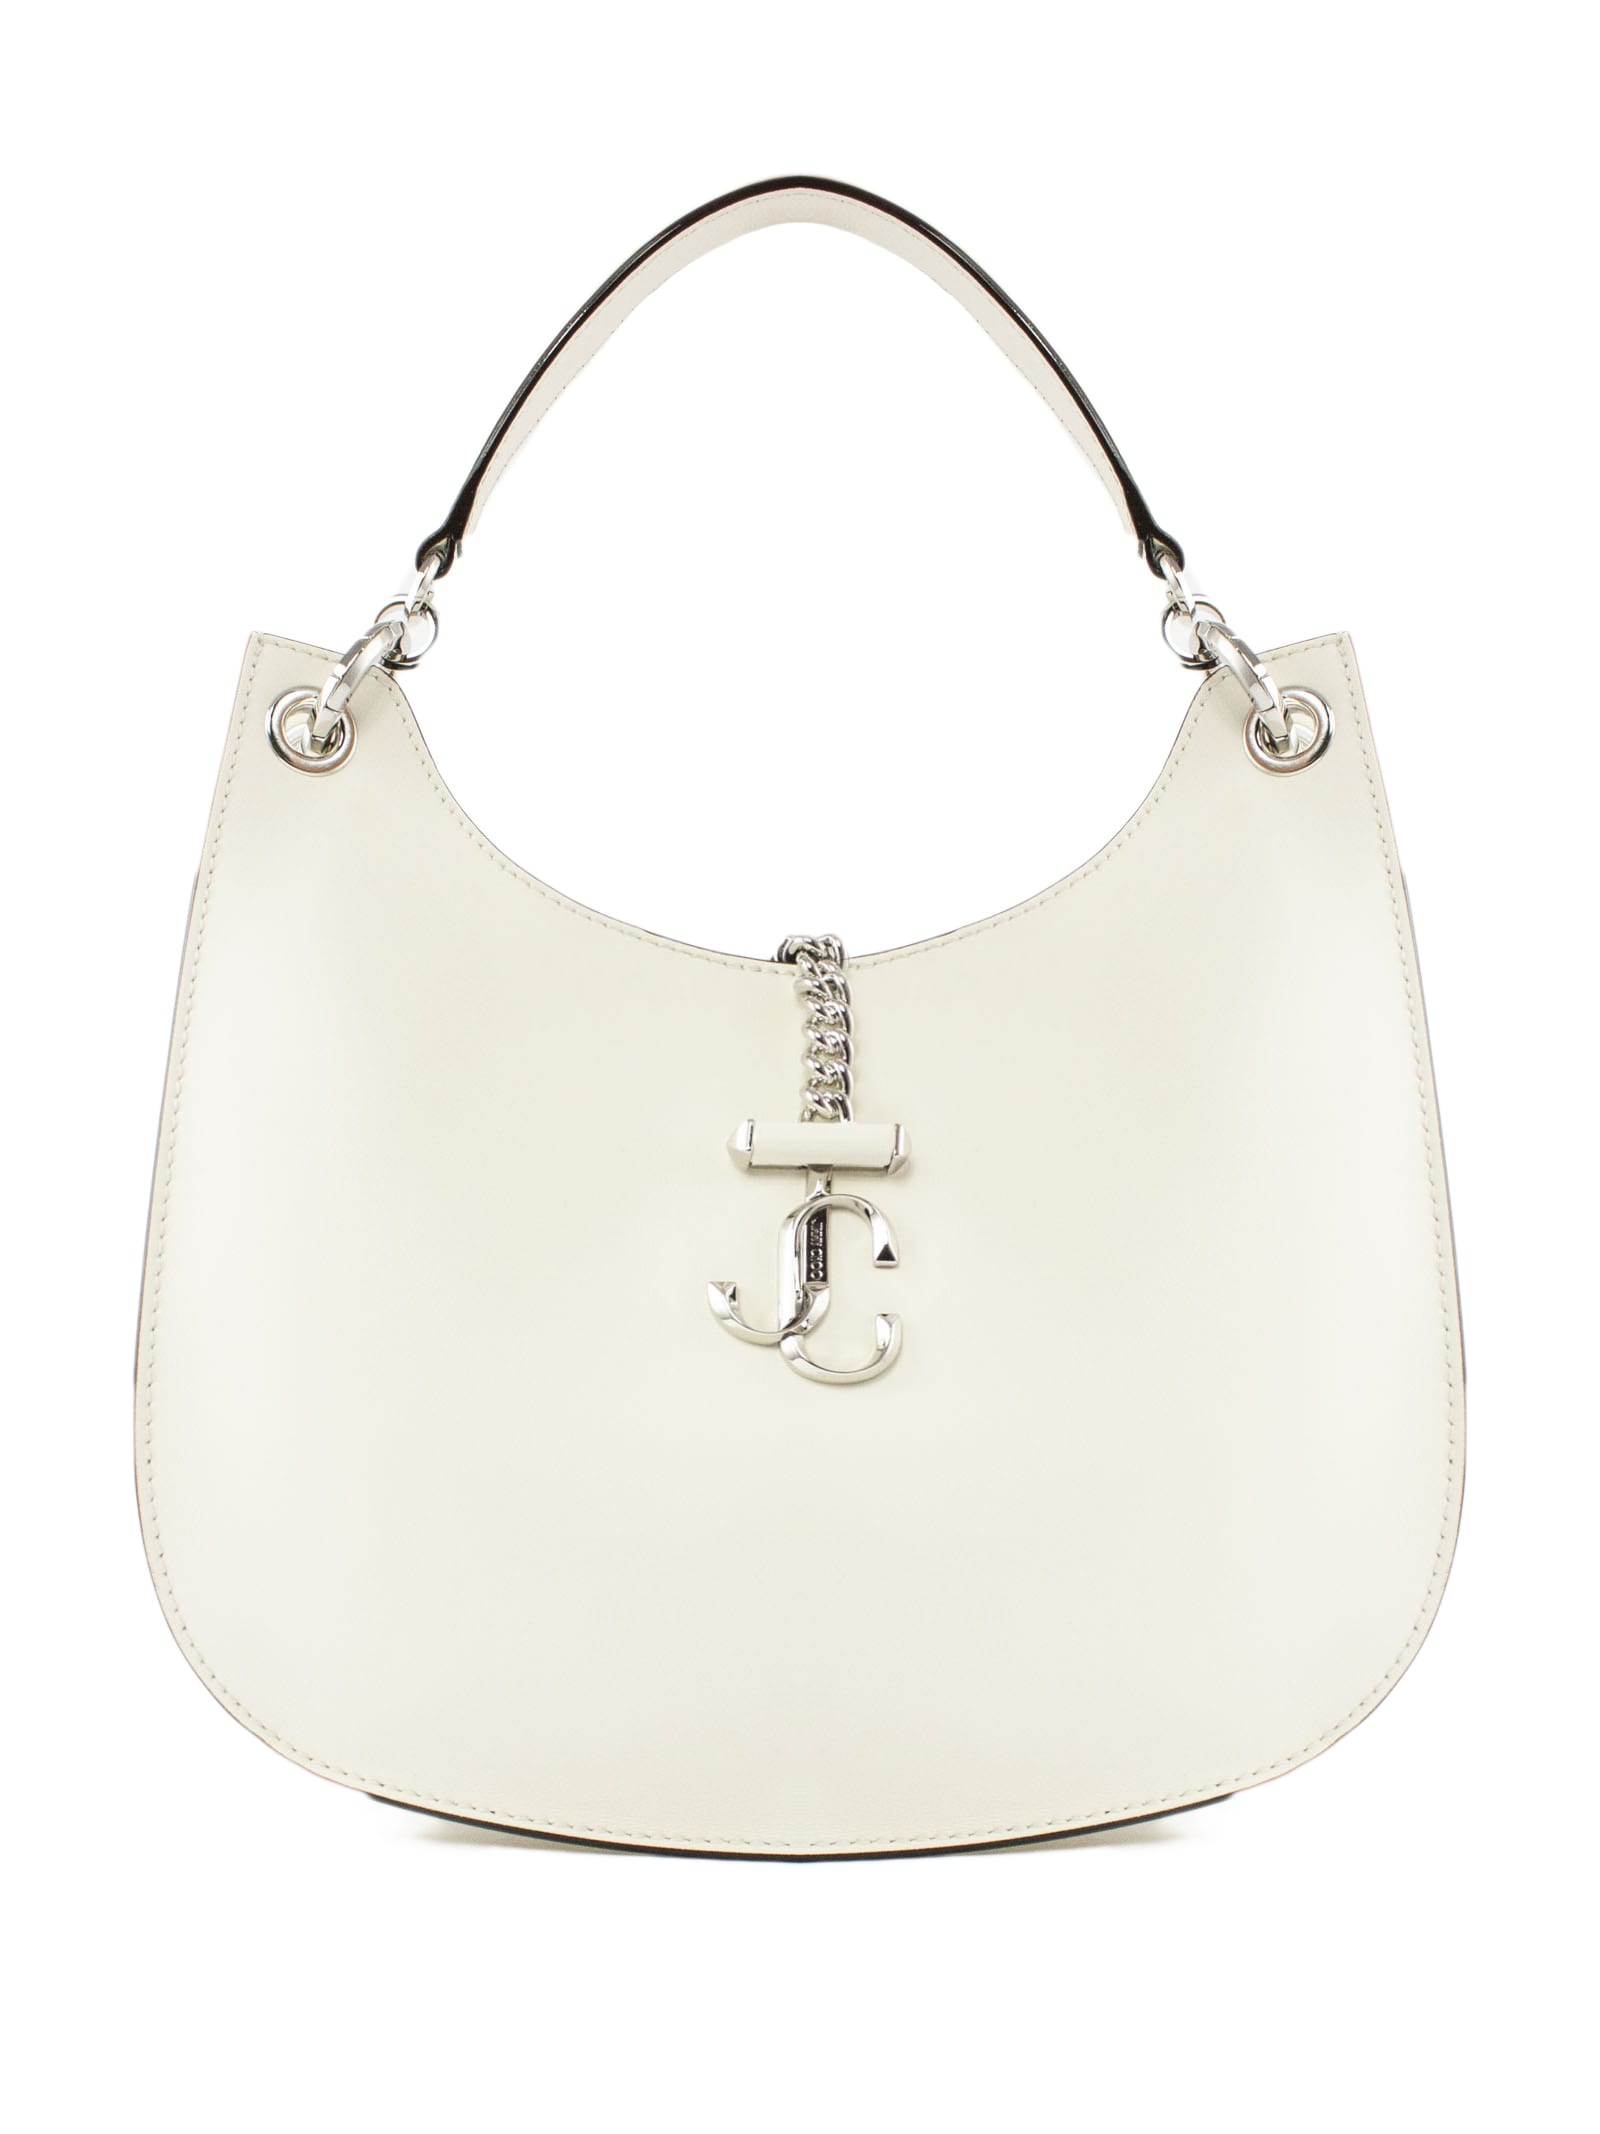 Jimmy Choo White Calf Leather Handbag